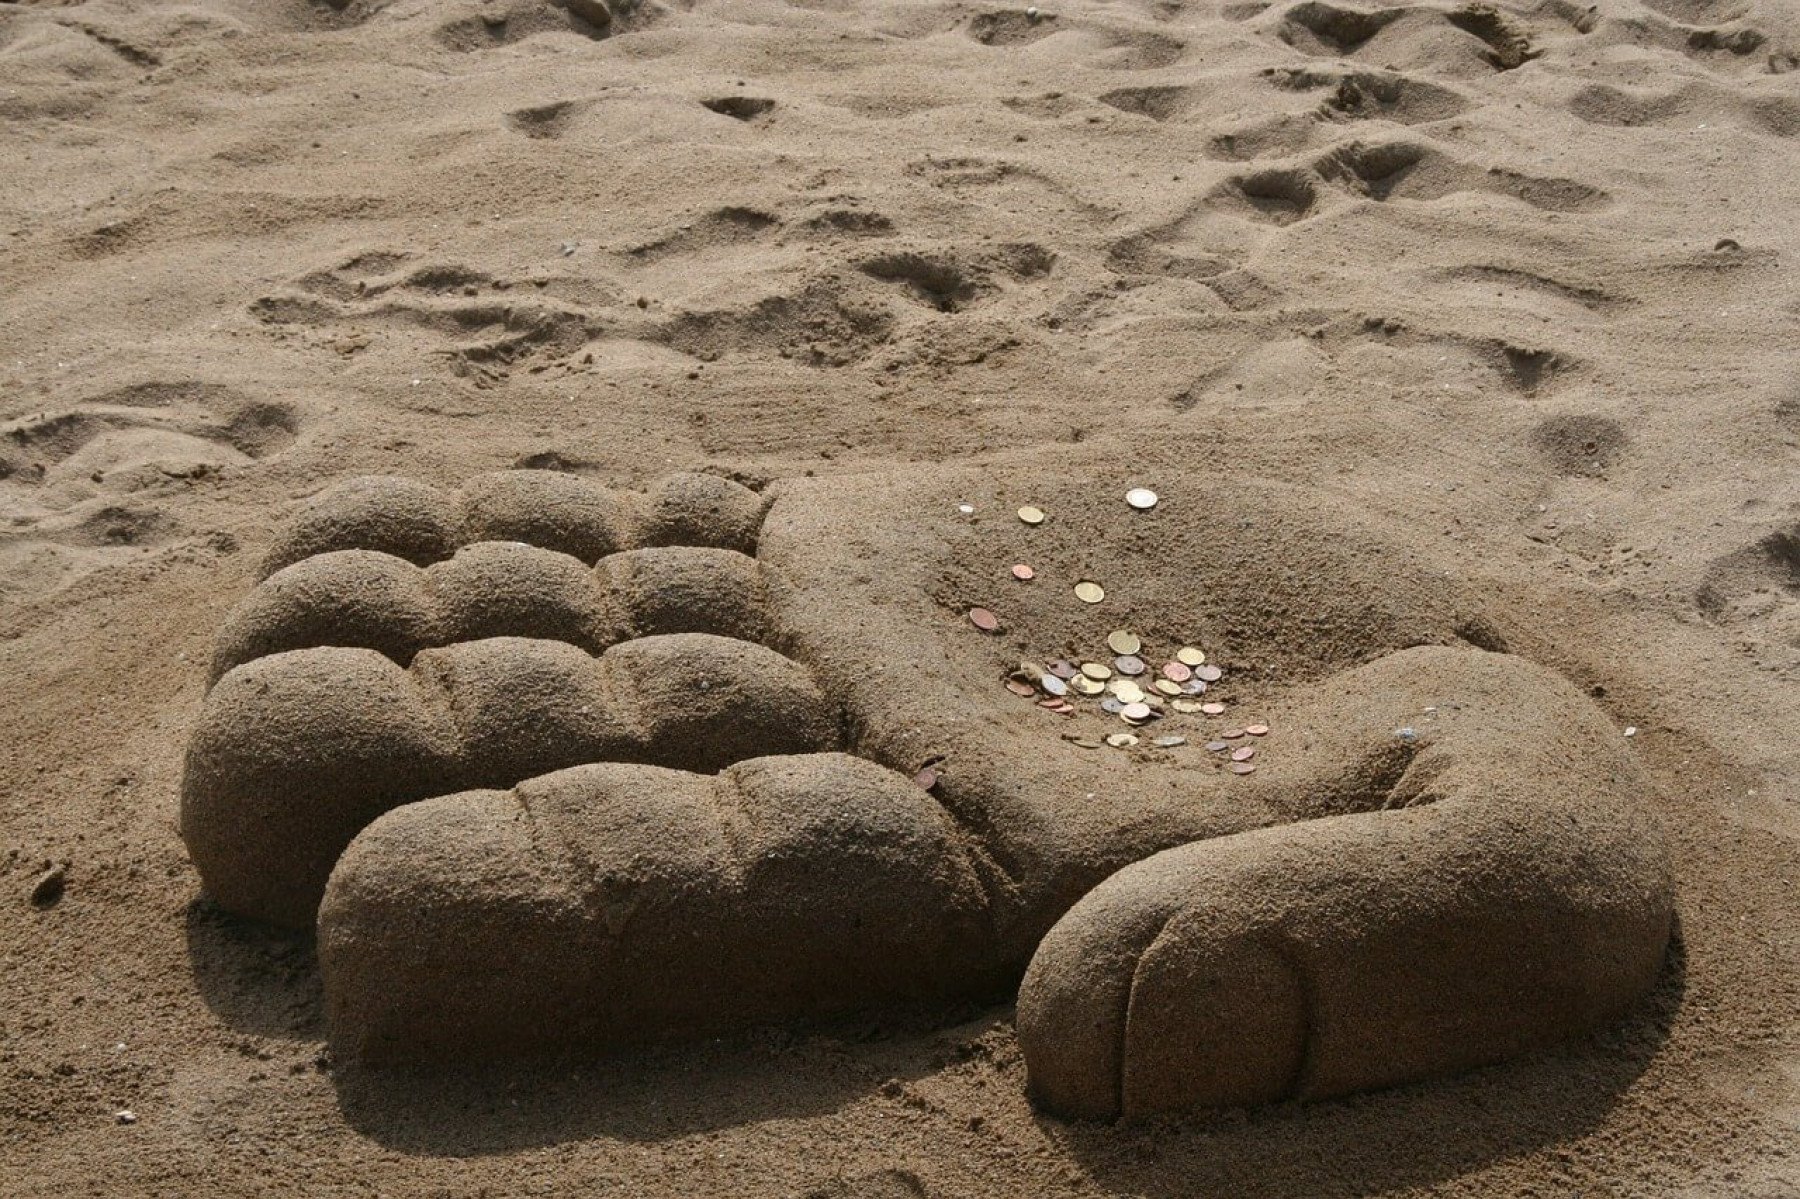 En strand med ett sandslott som liknar en hand. På handen ligger det mynt